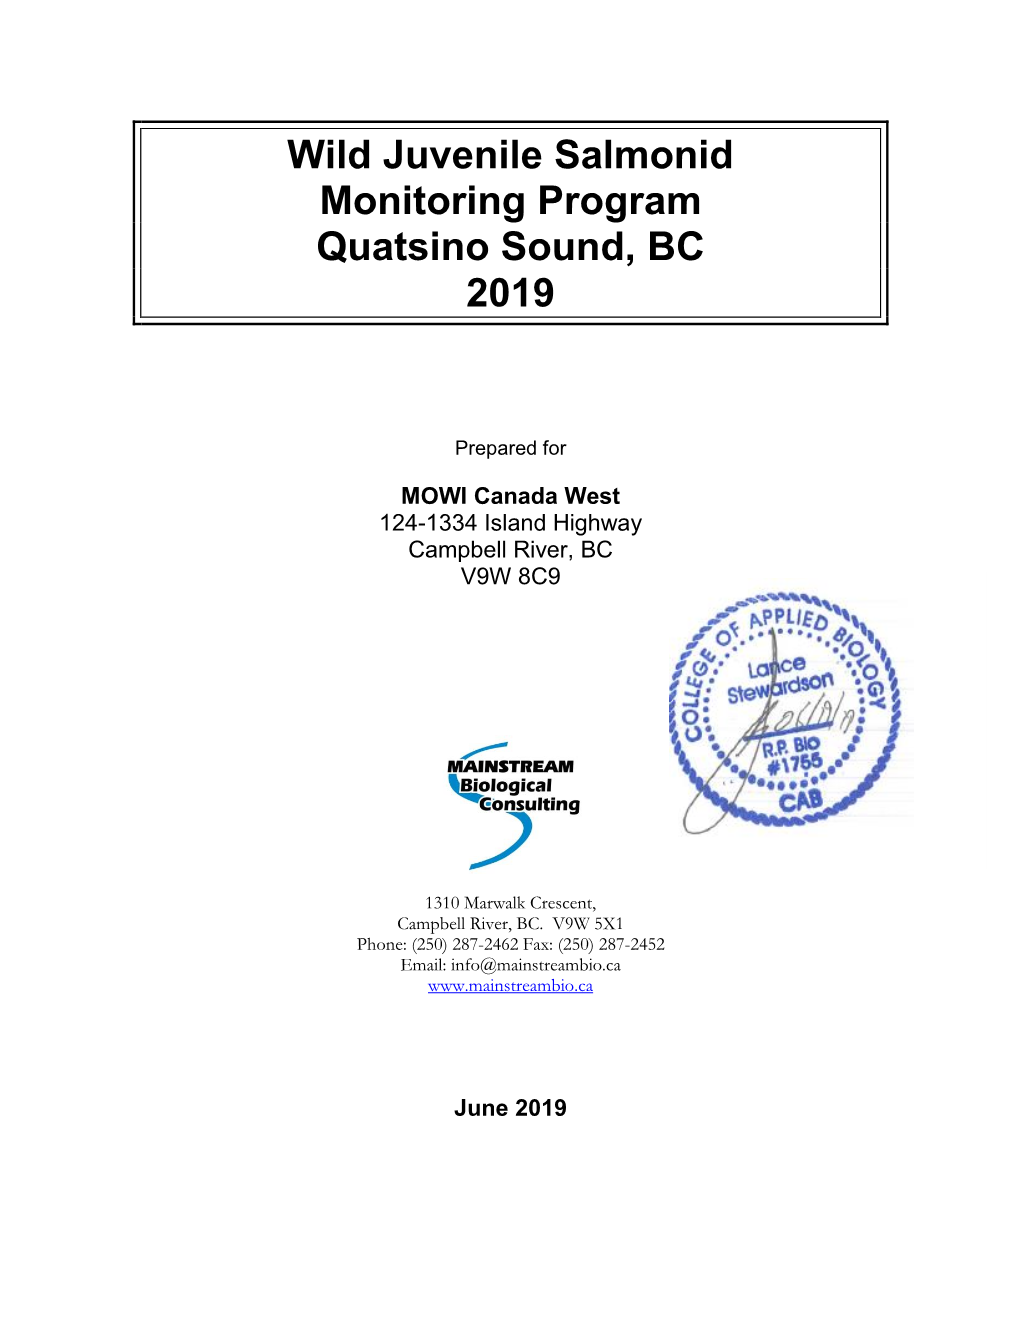 Wild Juvenile Salmonid Monitoring Program Quatsino Sound, BC 2019